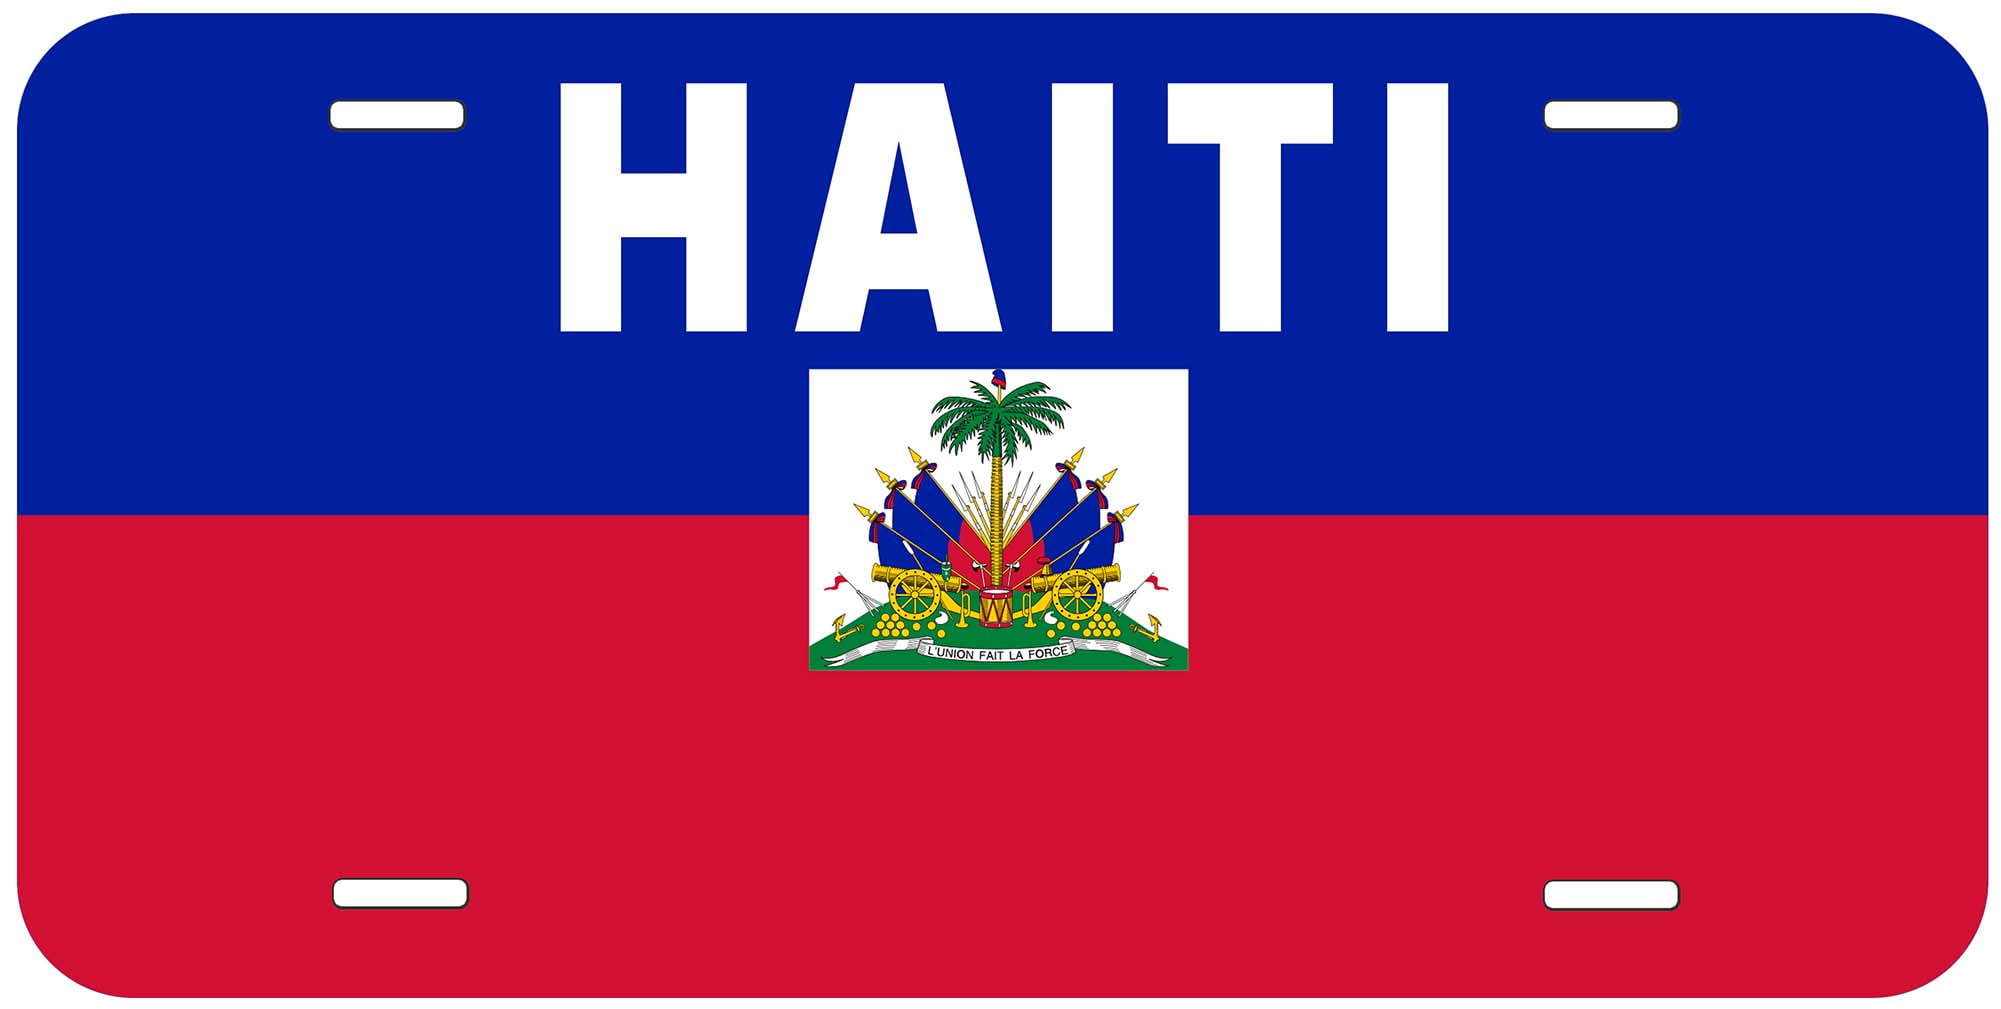 Haiti Haitian Flag Car Magnet Decal 4 x 6 Heavy Duty for Car Truck SUV 